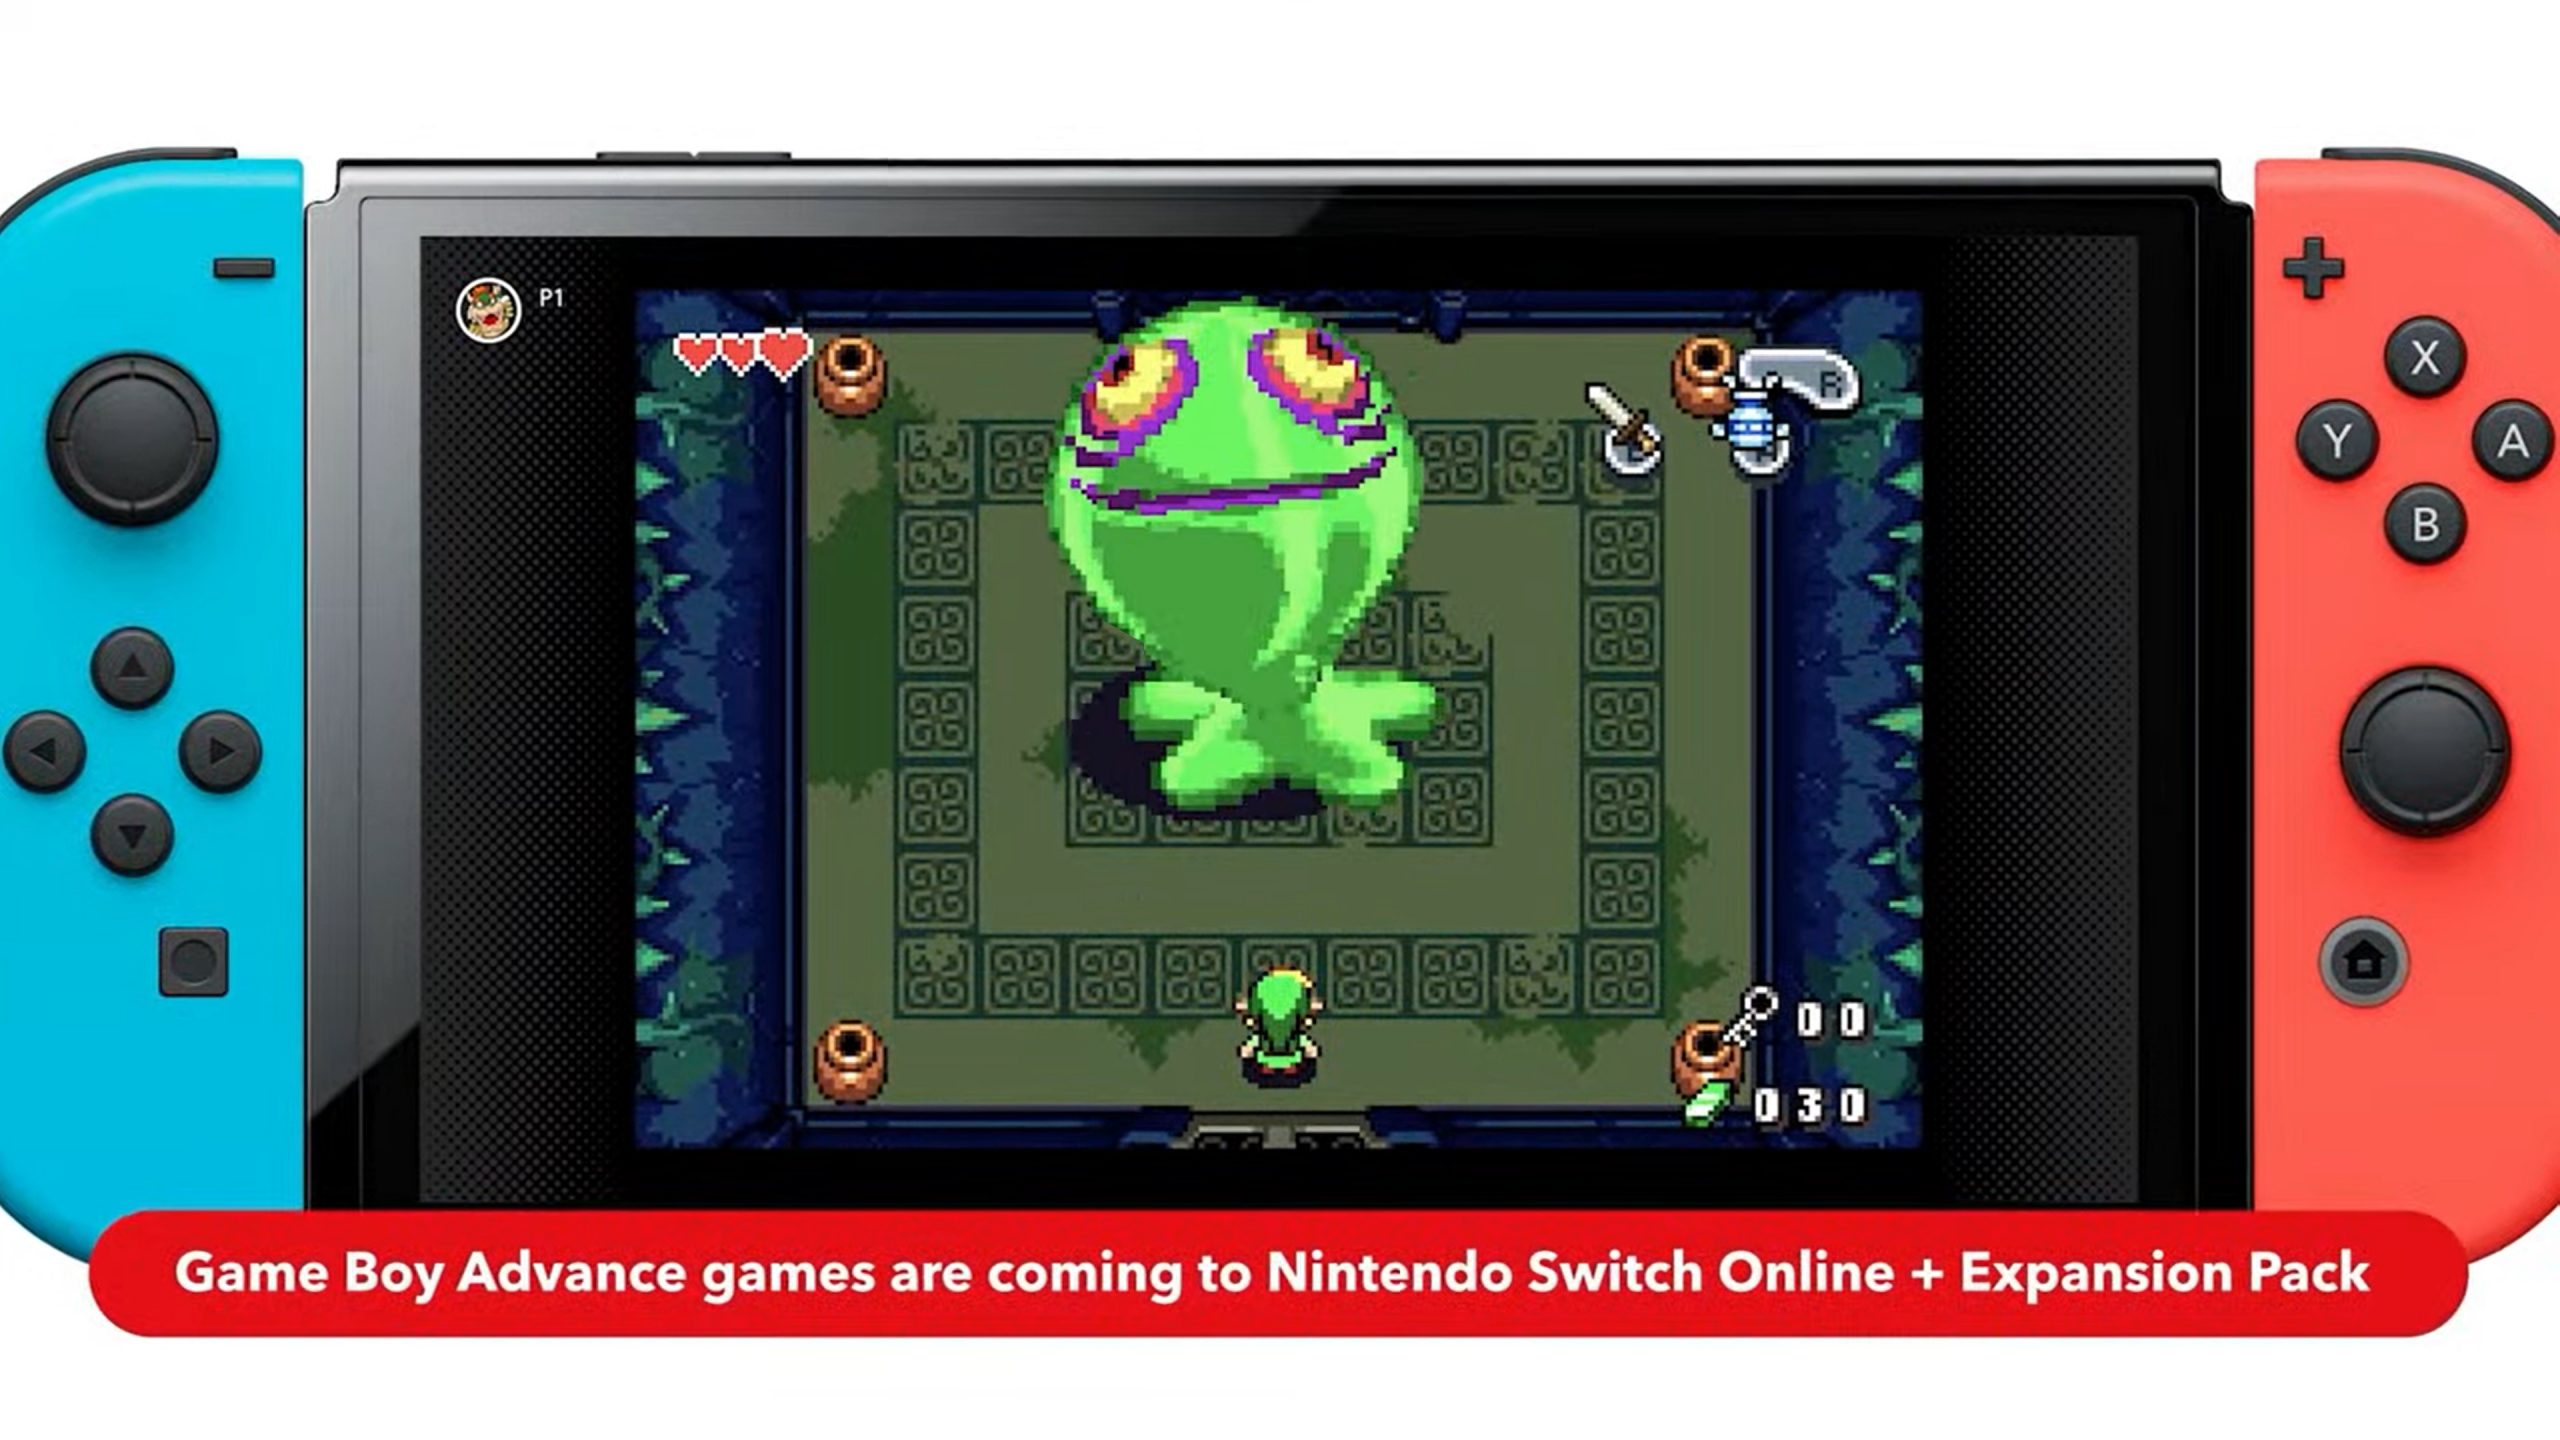 Nintendo Switch Online + Expansion Pack: SEGA Genesis games for April -  News - Nintendo Official Site